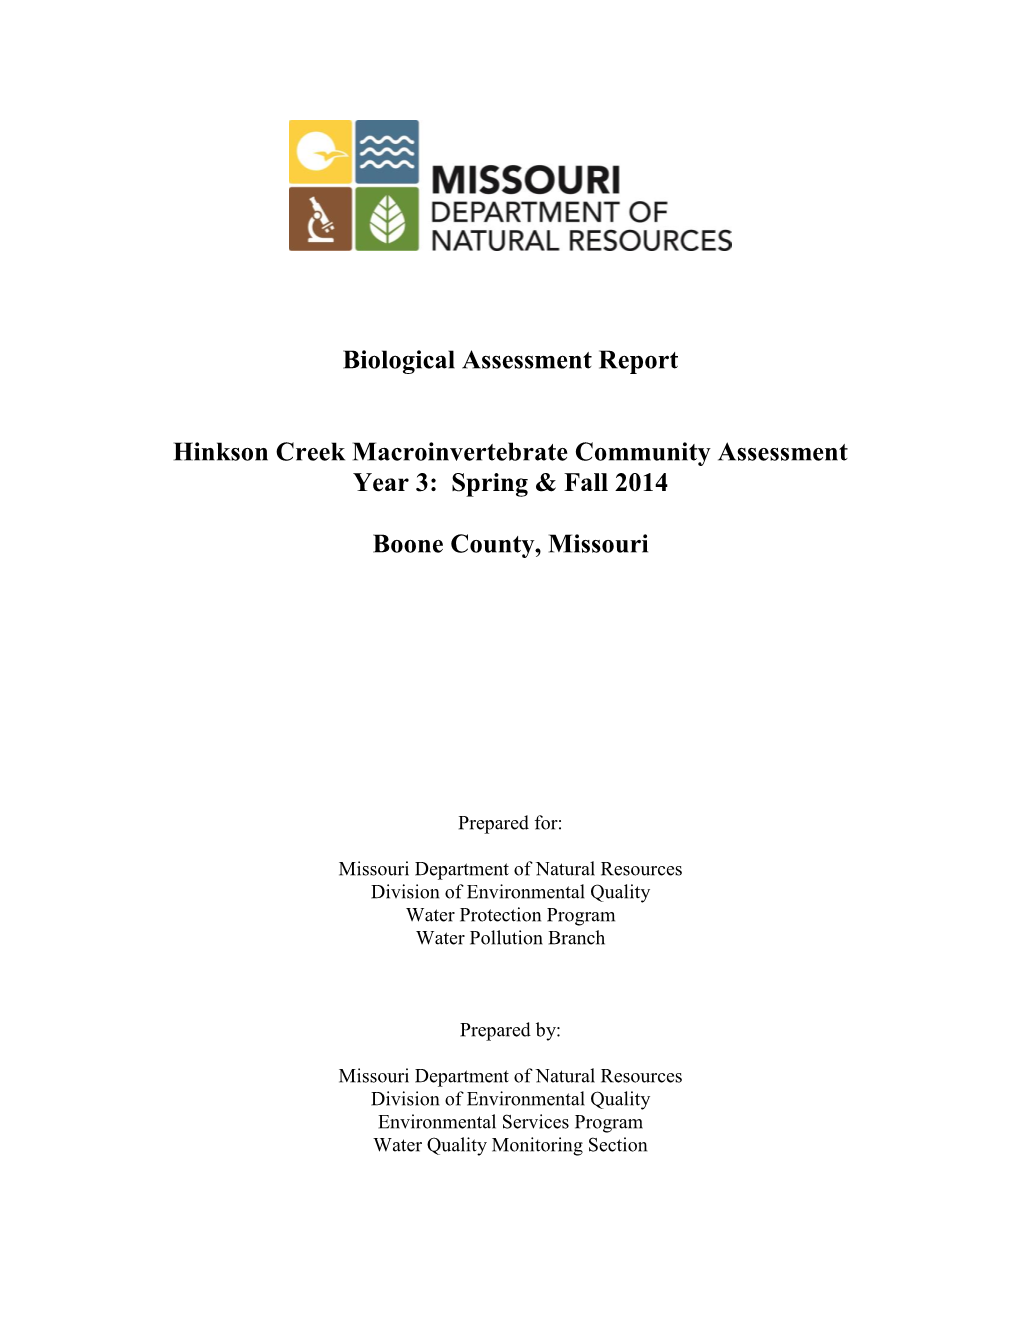 Hinkson Creek Macroinvertebrate Community Assessment Year 3: Spring & Fall 2014